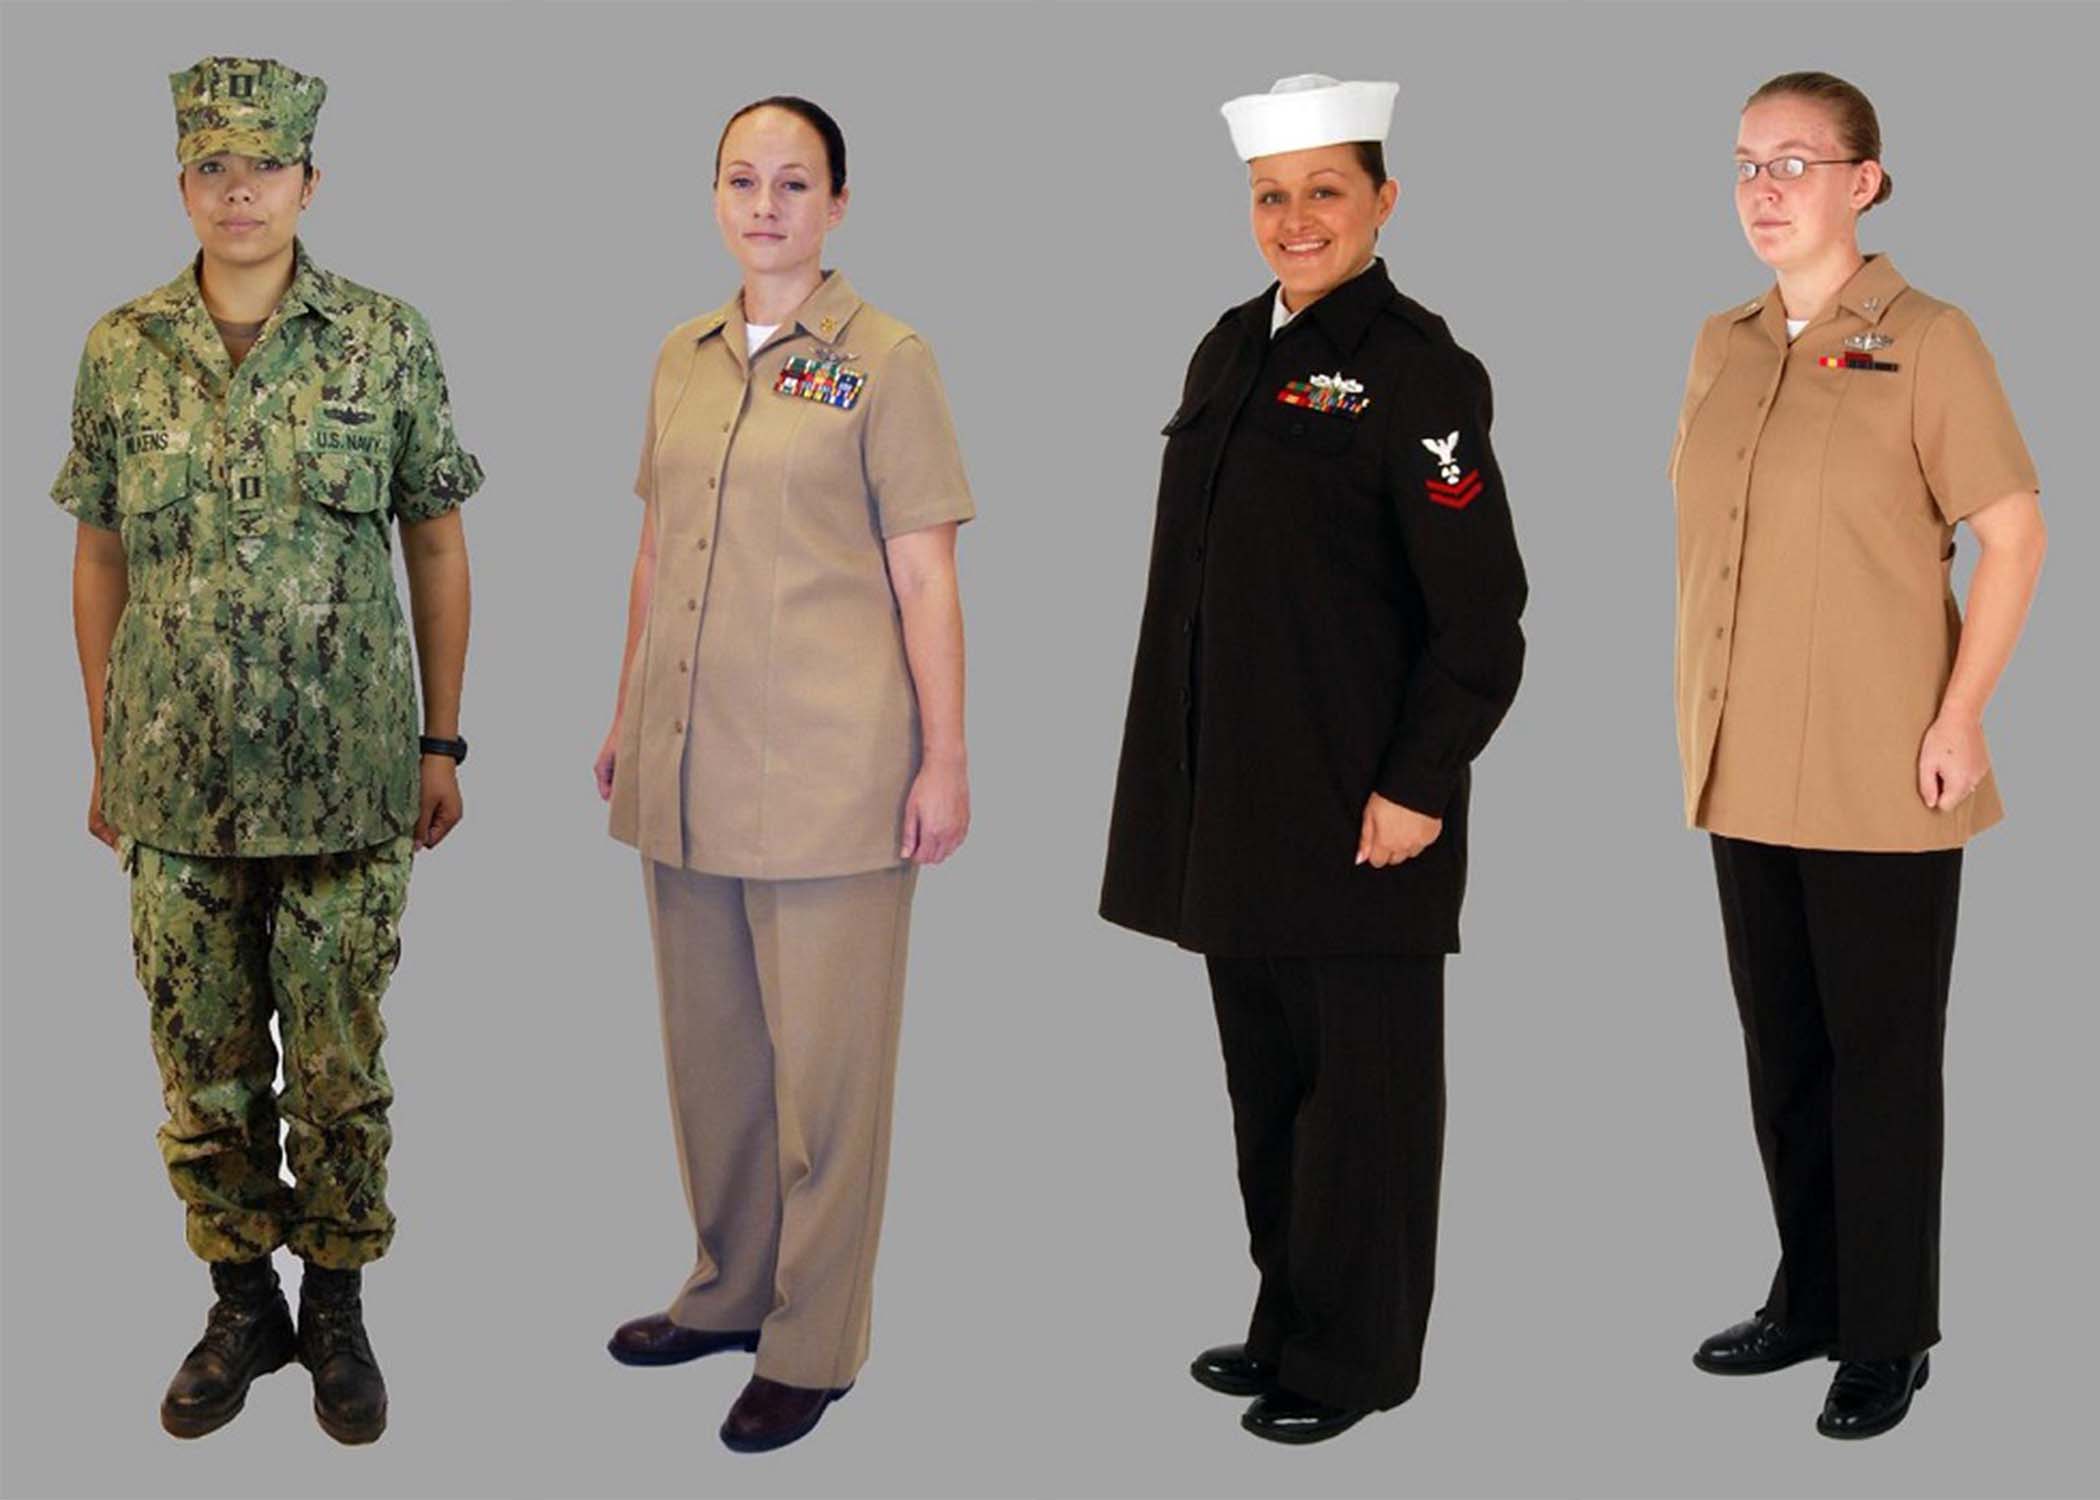 Navy now allows sailors to wear leggings under PT shorts - Task